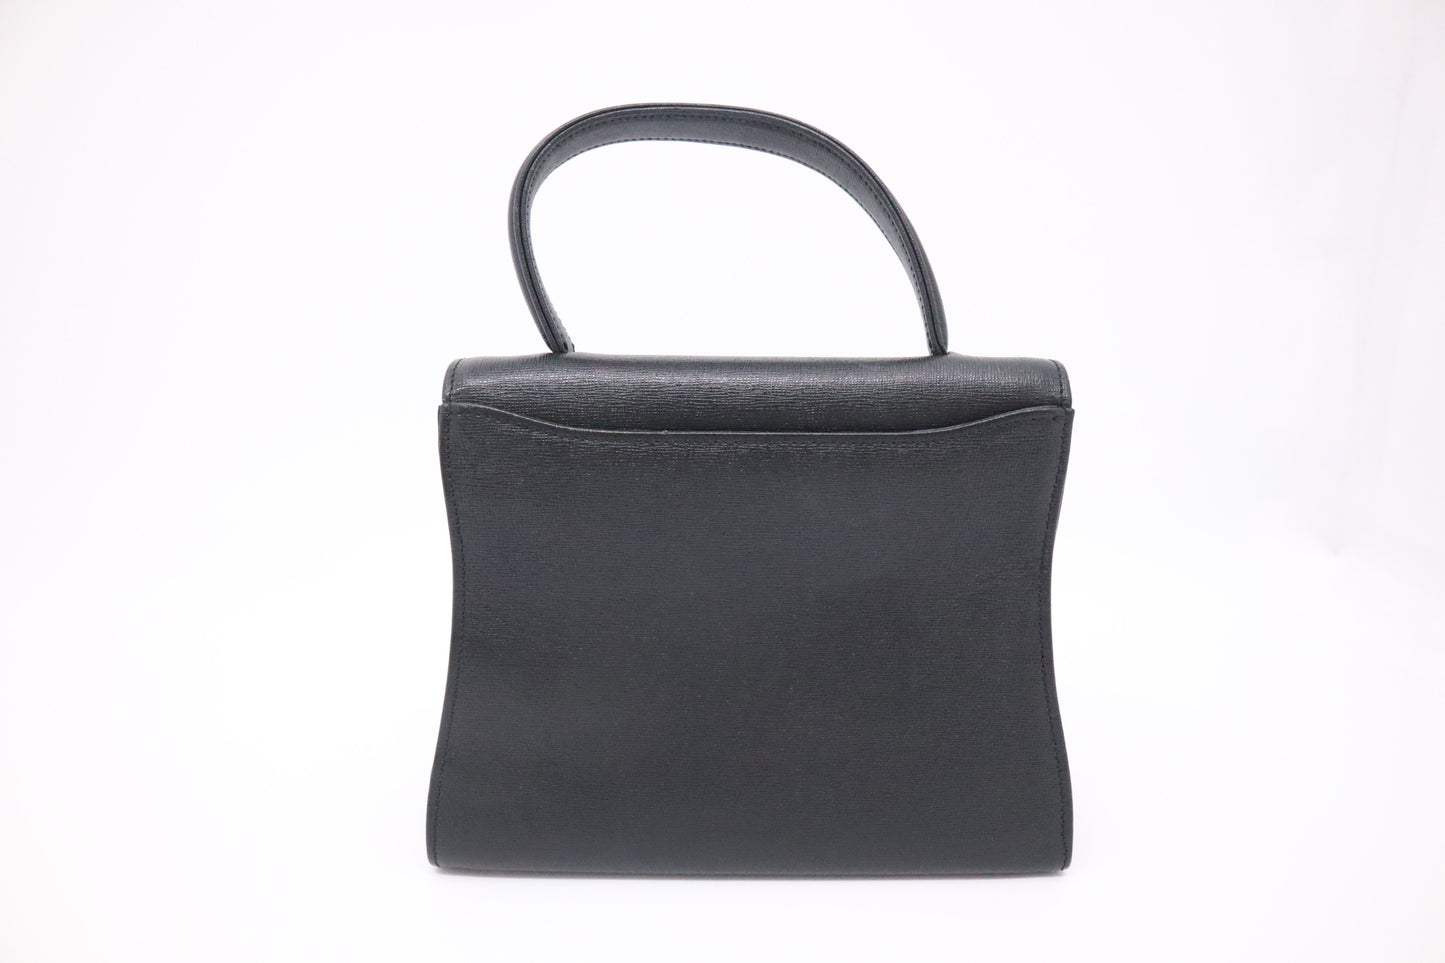 Givenchy Handbag in Black leather